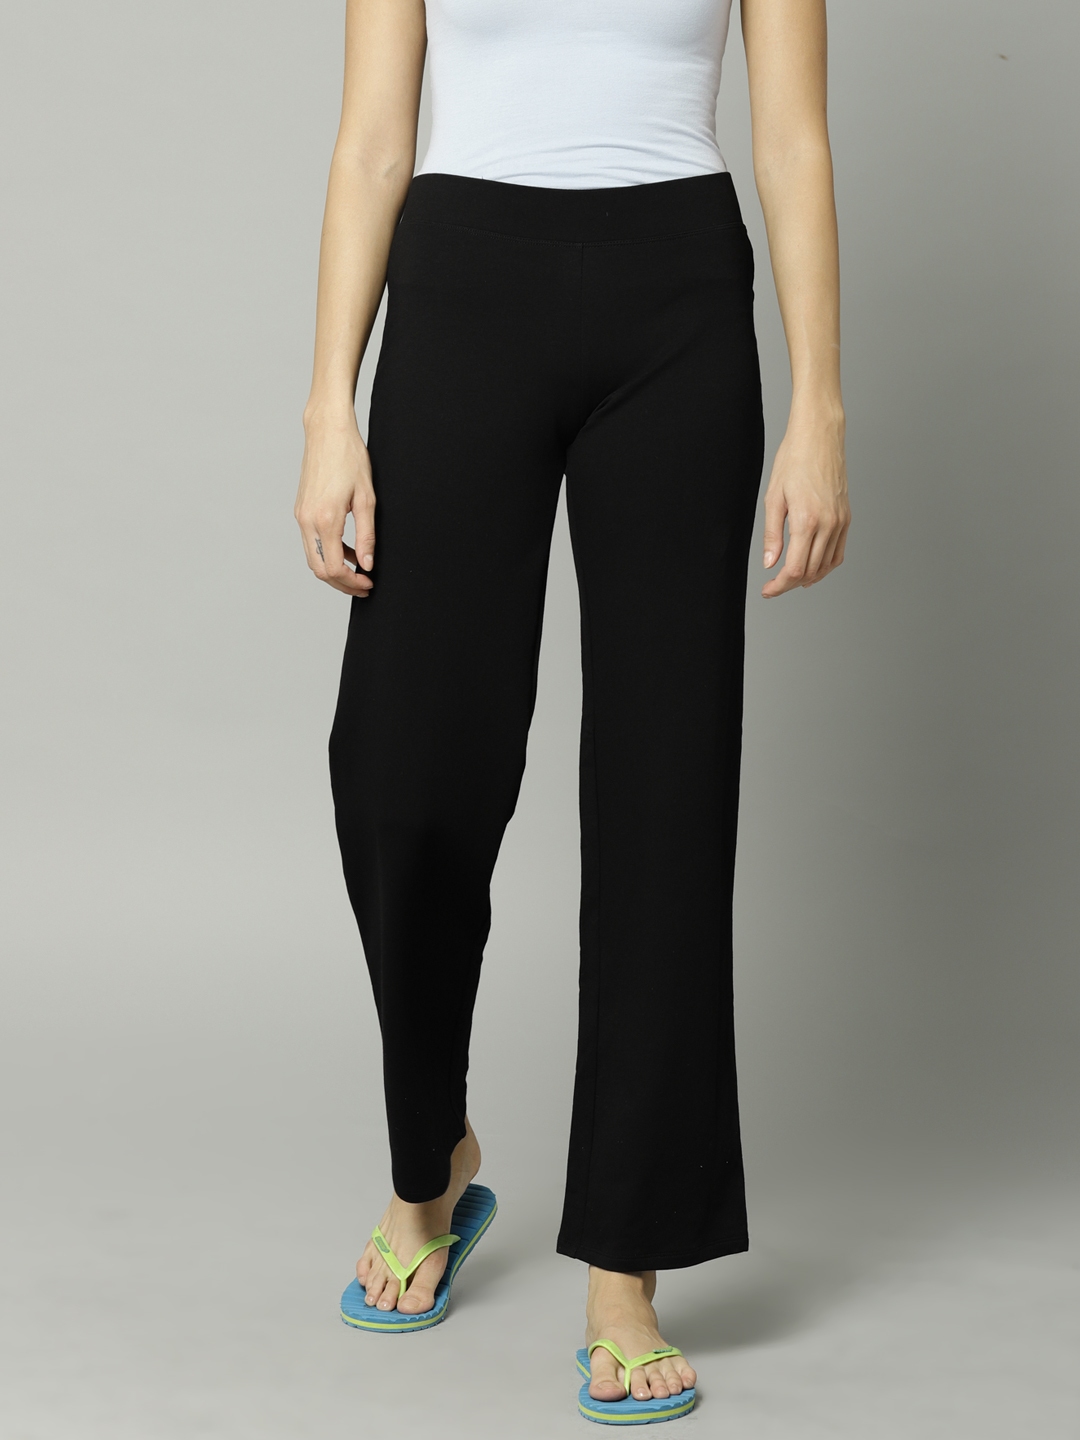 Buy GO COLORS Women Printed Black Knit Cotton Lounge Pants at Amazonin